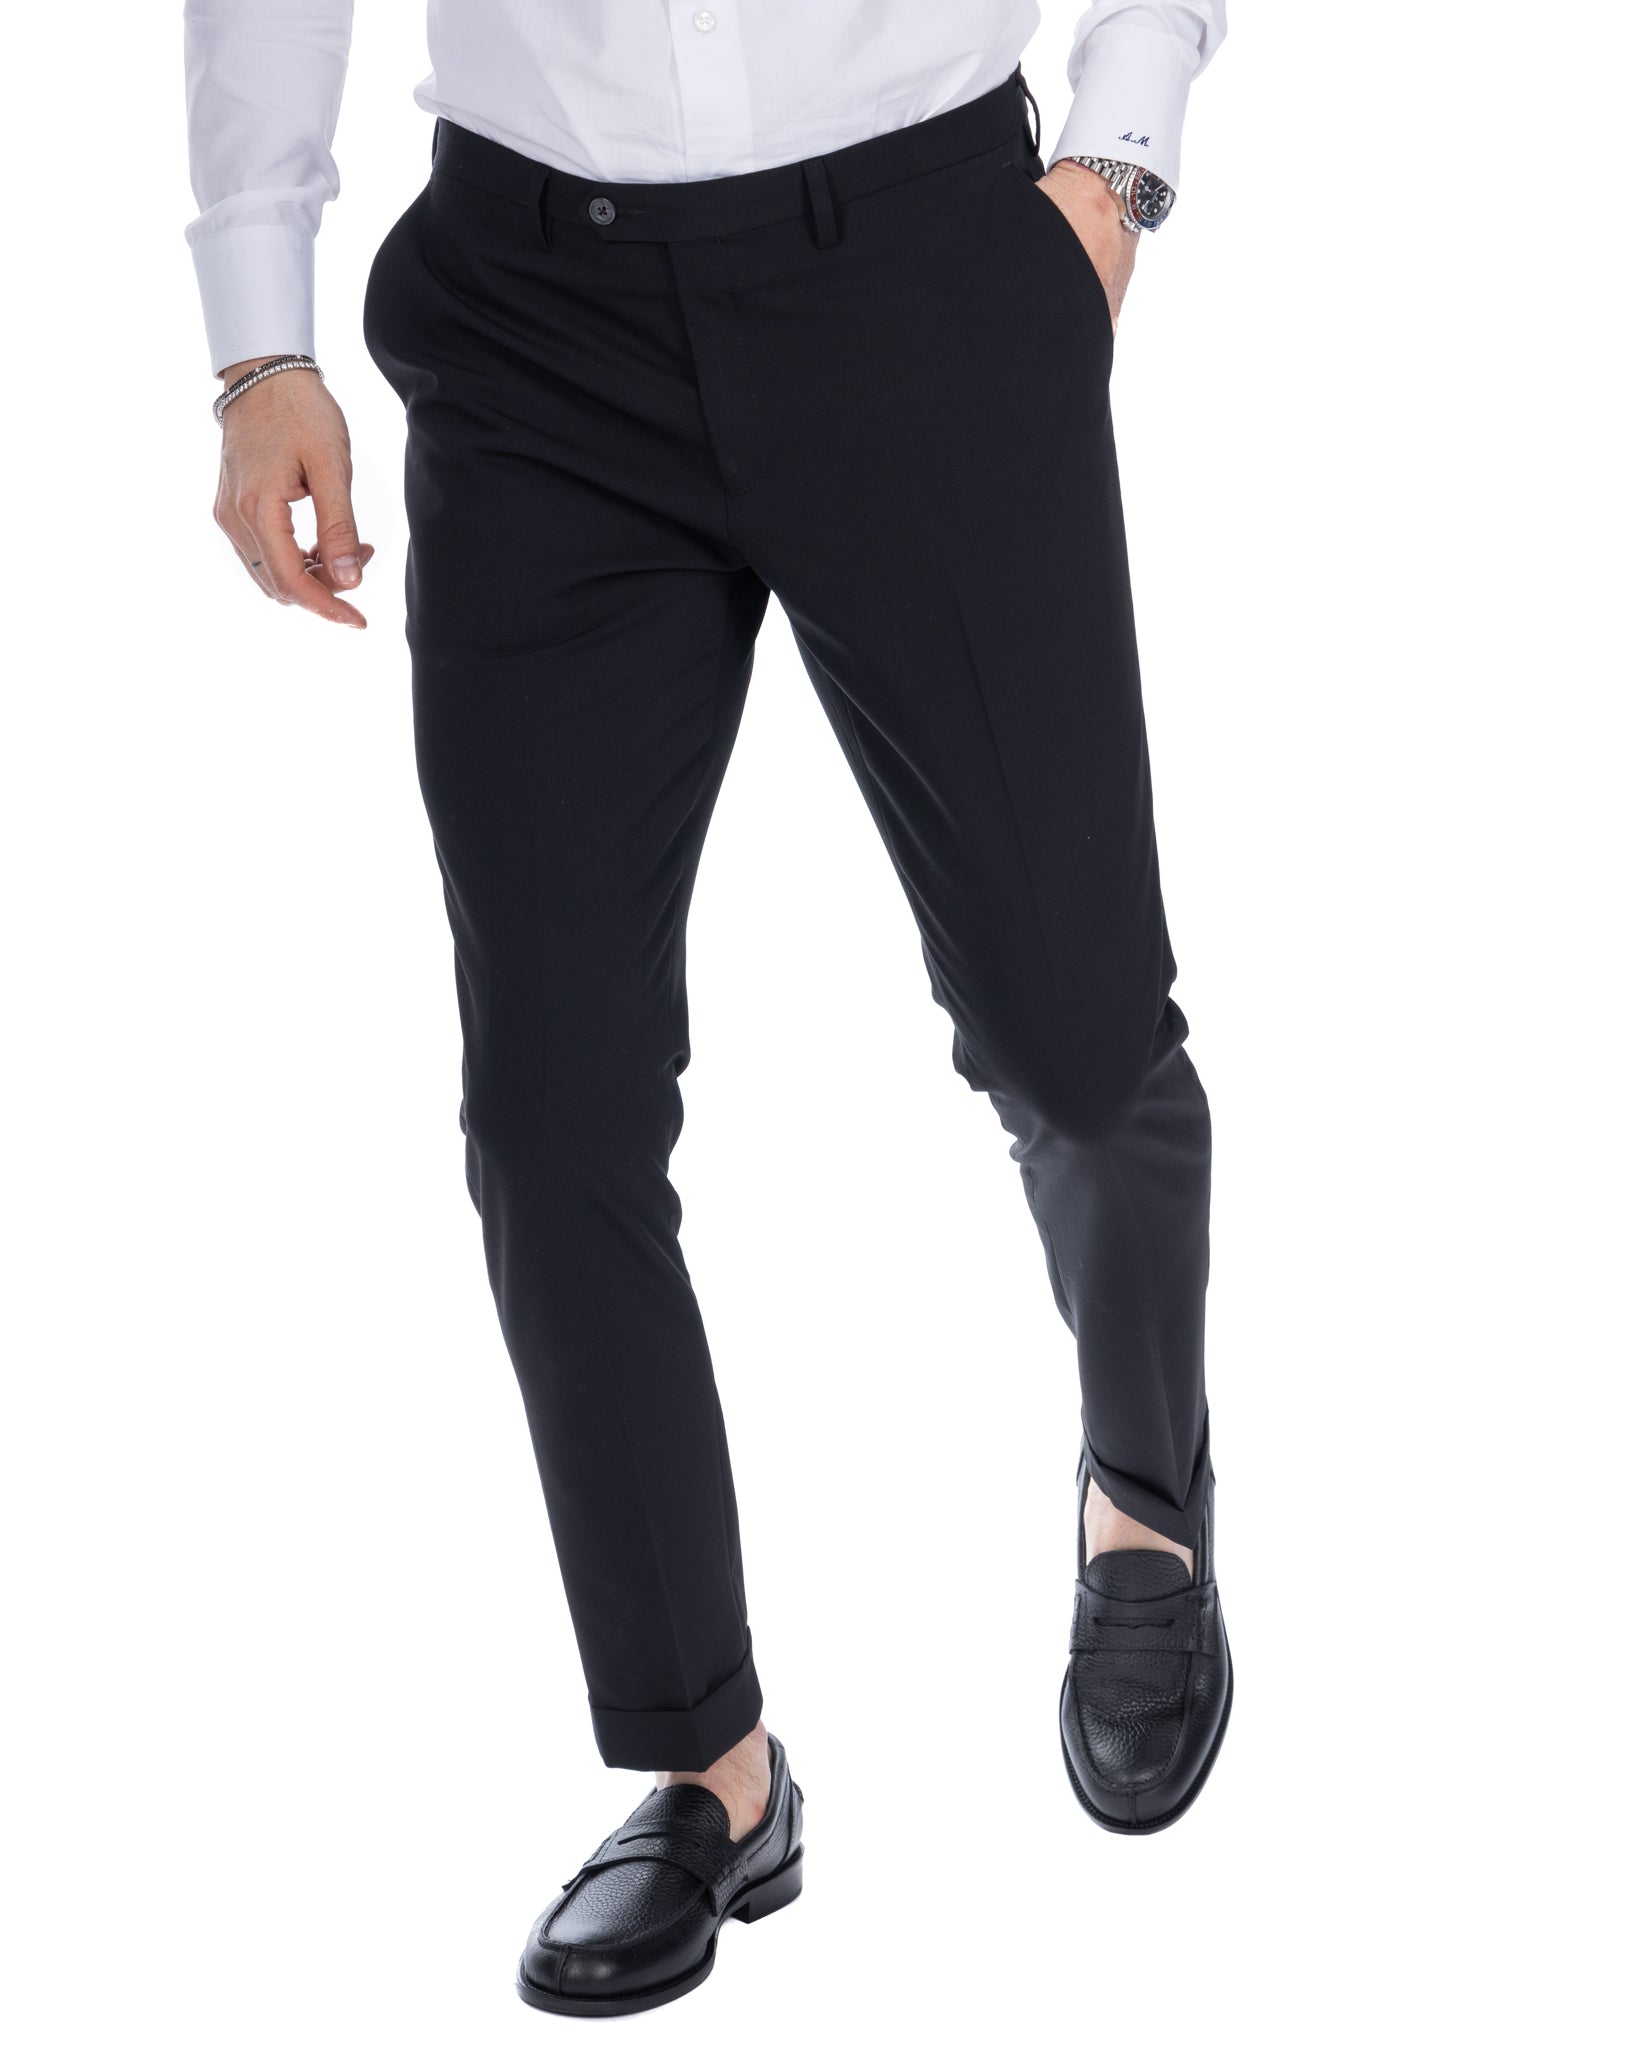 Brema - pantalon basique noir